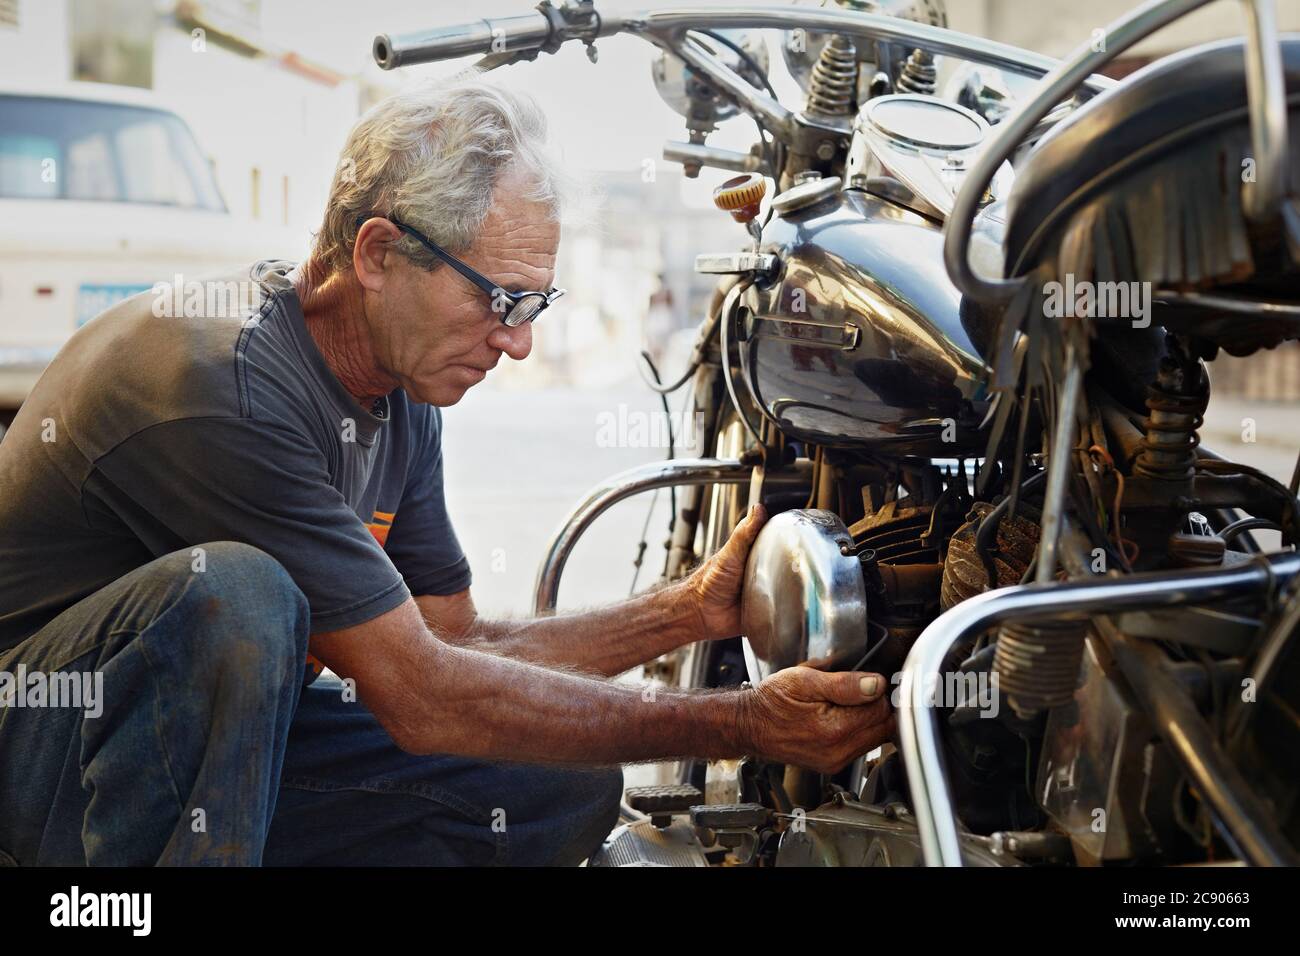 Senior Man Examining His Motorcycle And Fixing Engine Stock Photo